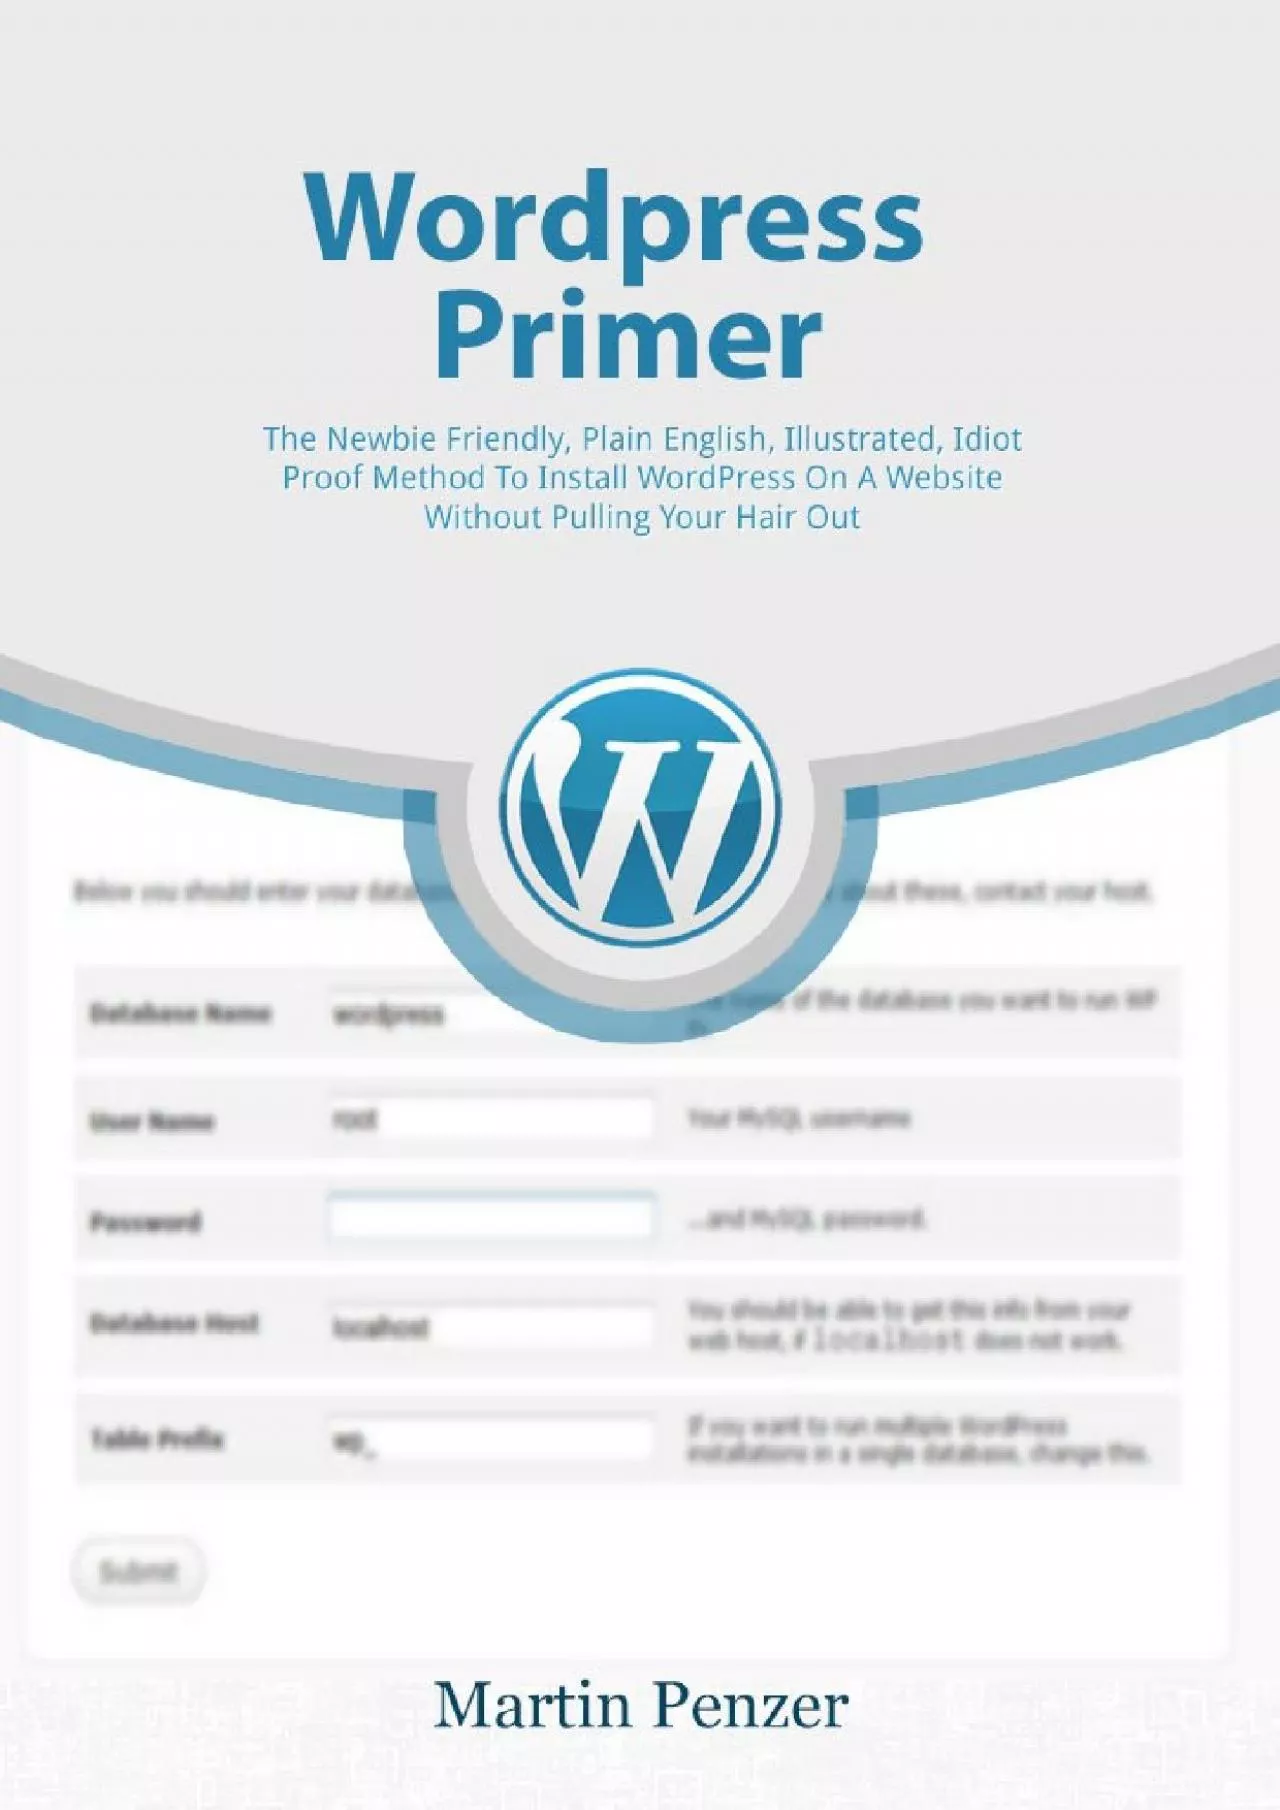 (EBOOK)-WordPress Primer The Newbie Friendly Plain English Illustrated Idiot Proof Method